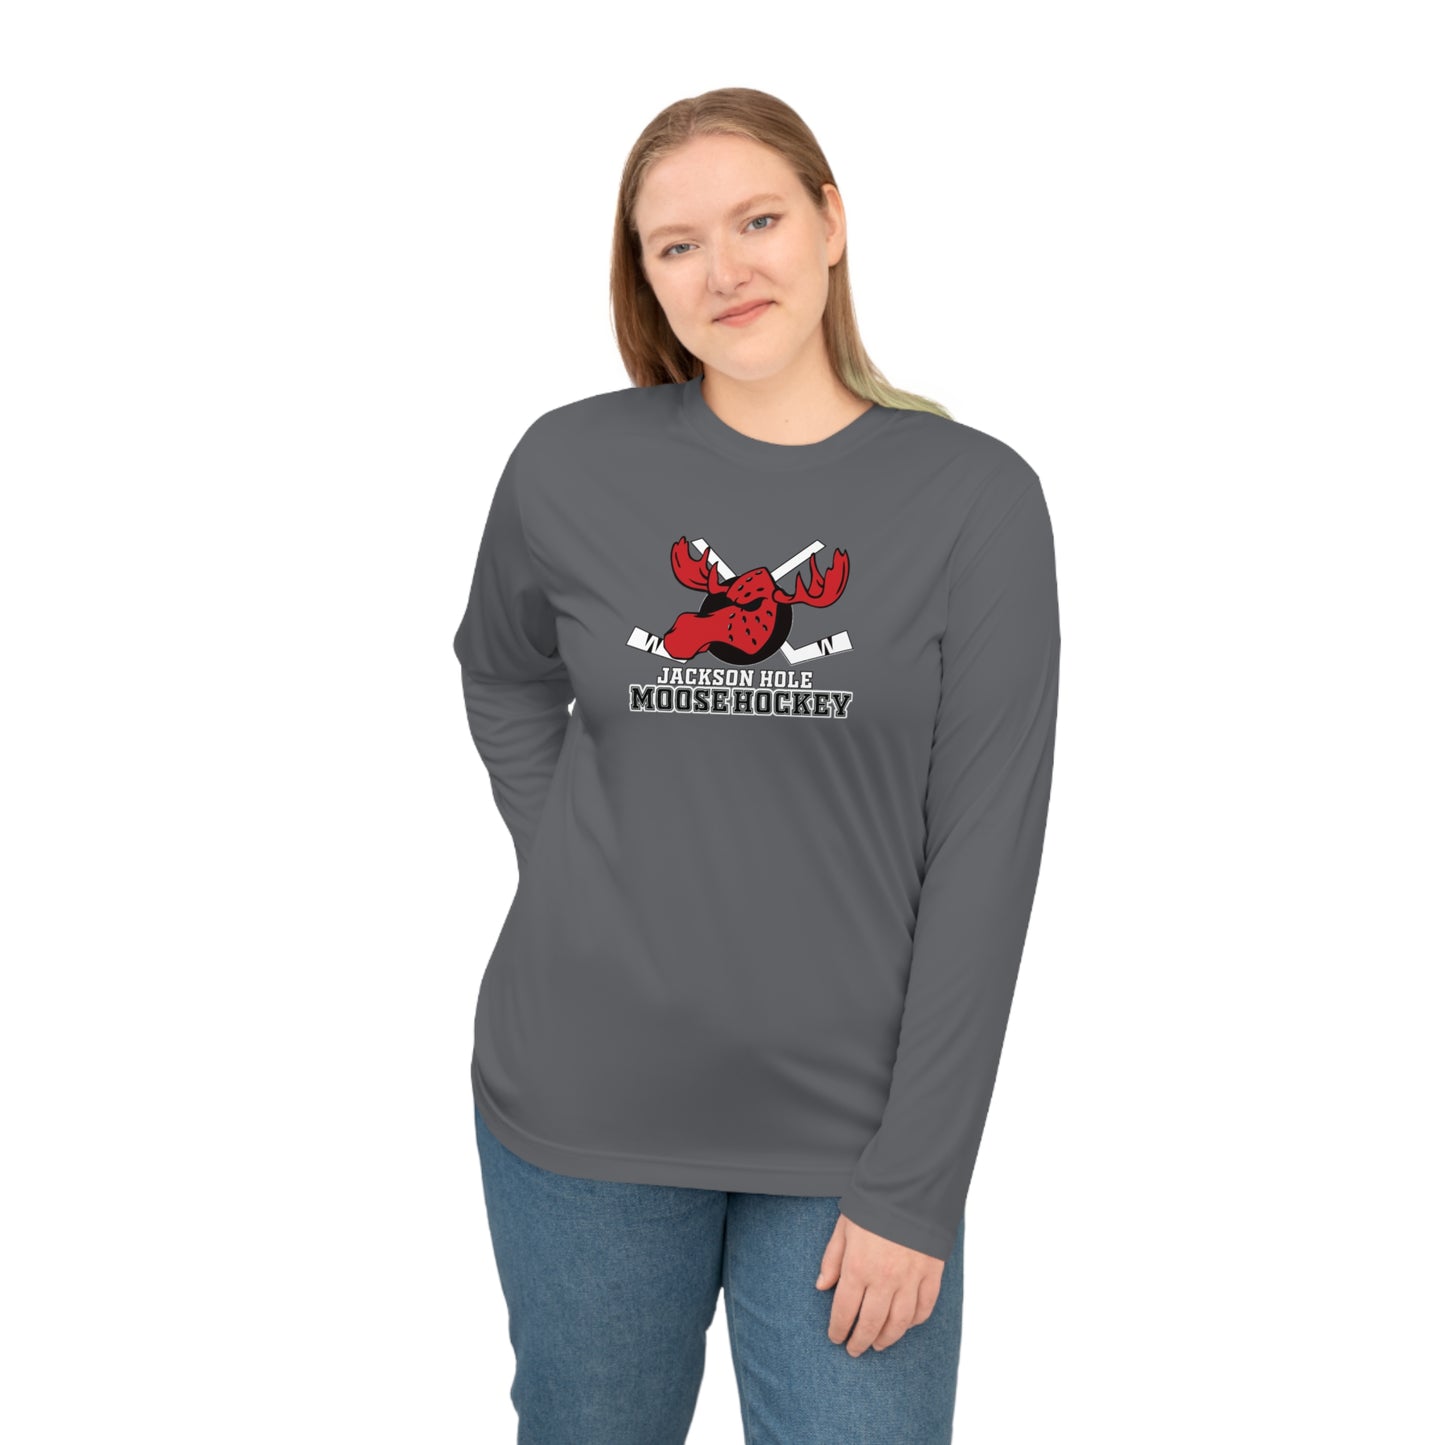 JH Moose Hockey Adult Unisex Performance Long Sleeve Shirt (Graphite)